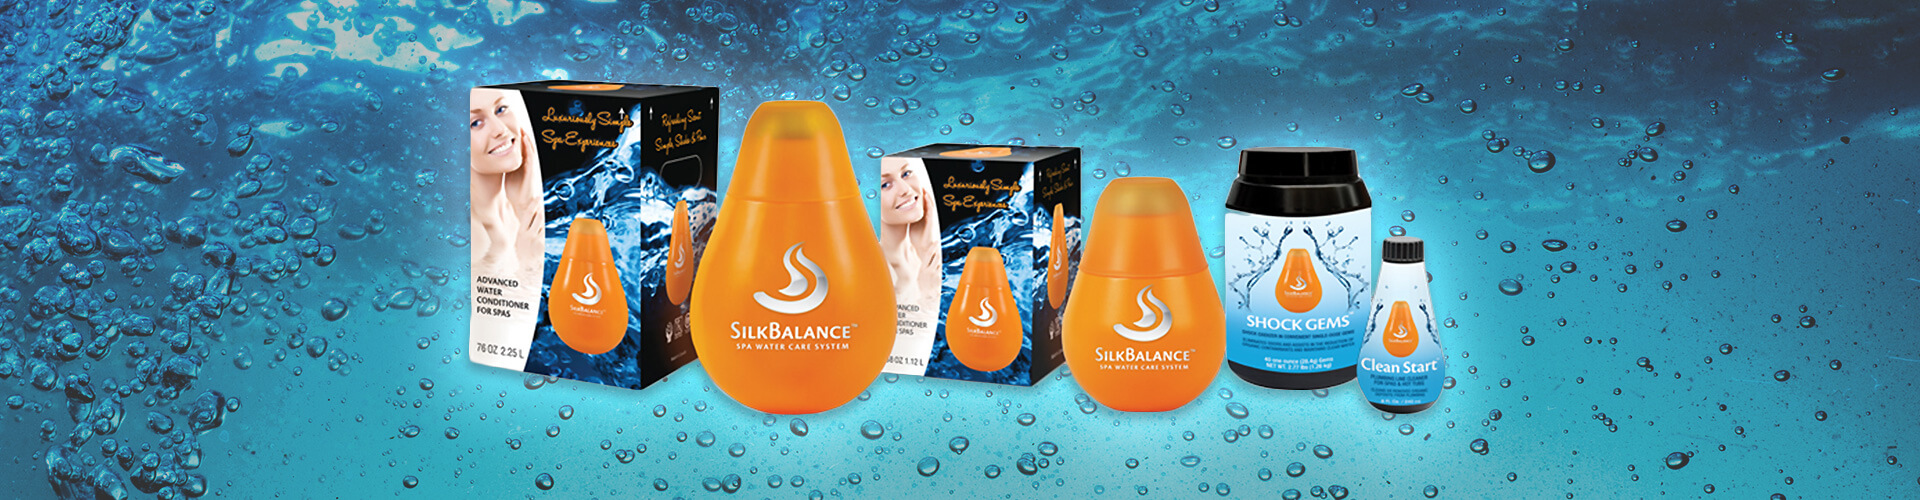 SilkBalance-products